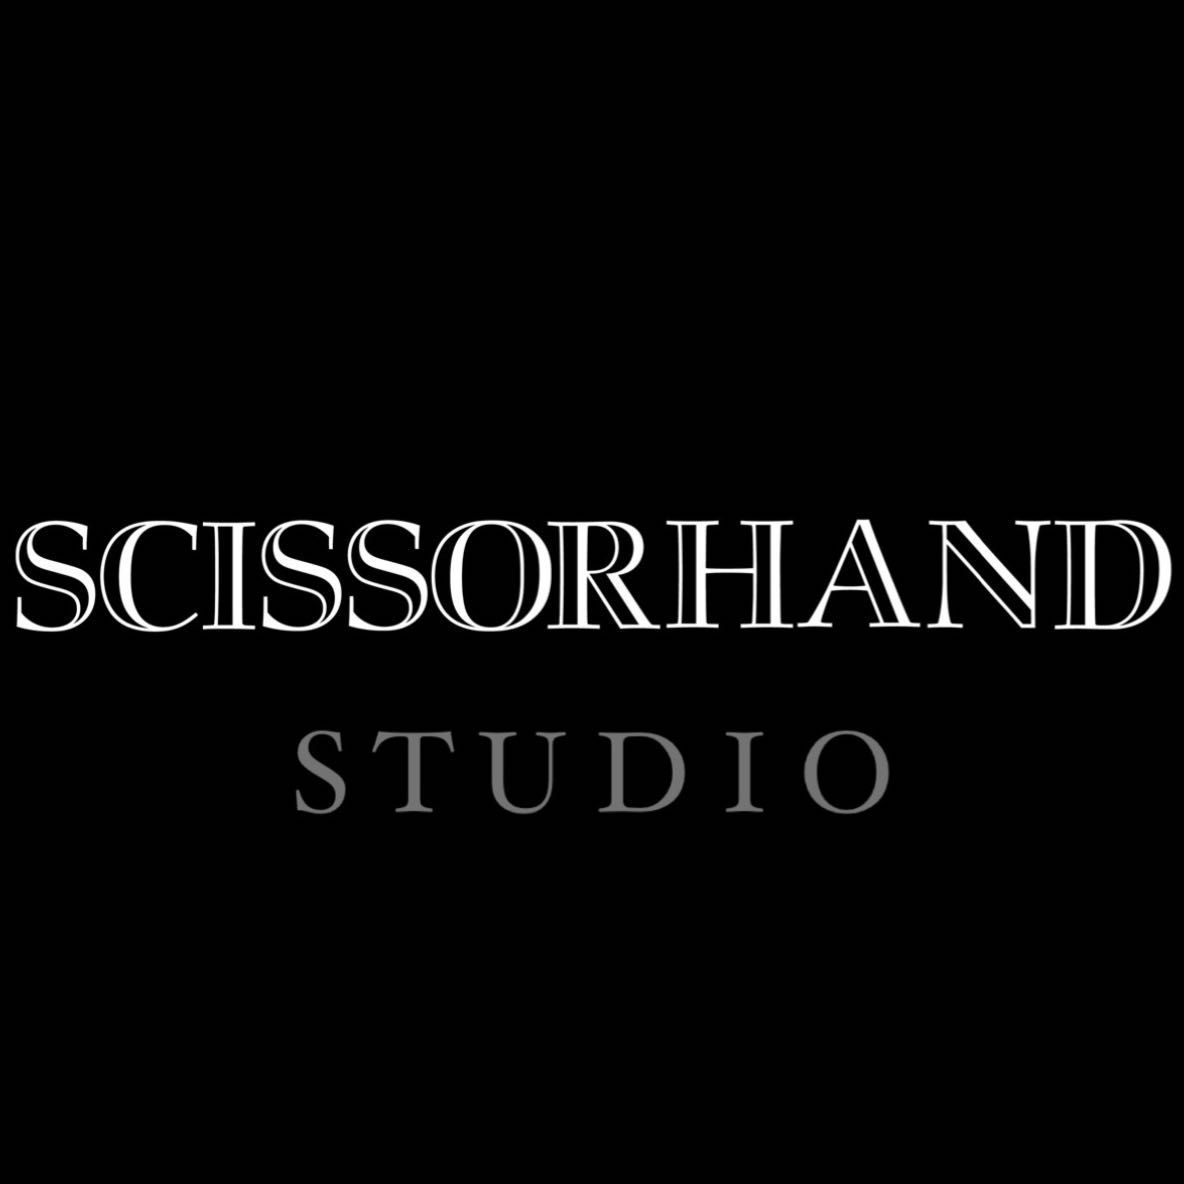 Scissorhand Studio, Salon Plaza 11160 Veirs Mill Rd, Suite 102, Wheaton, 20902